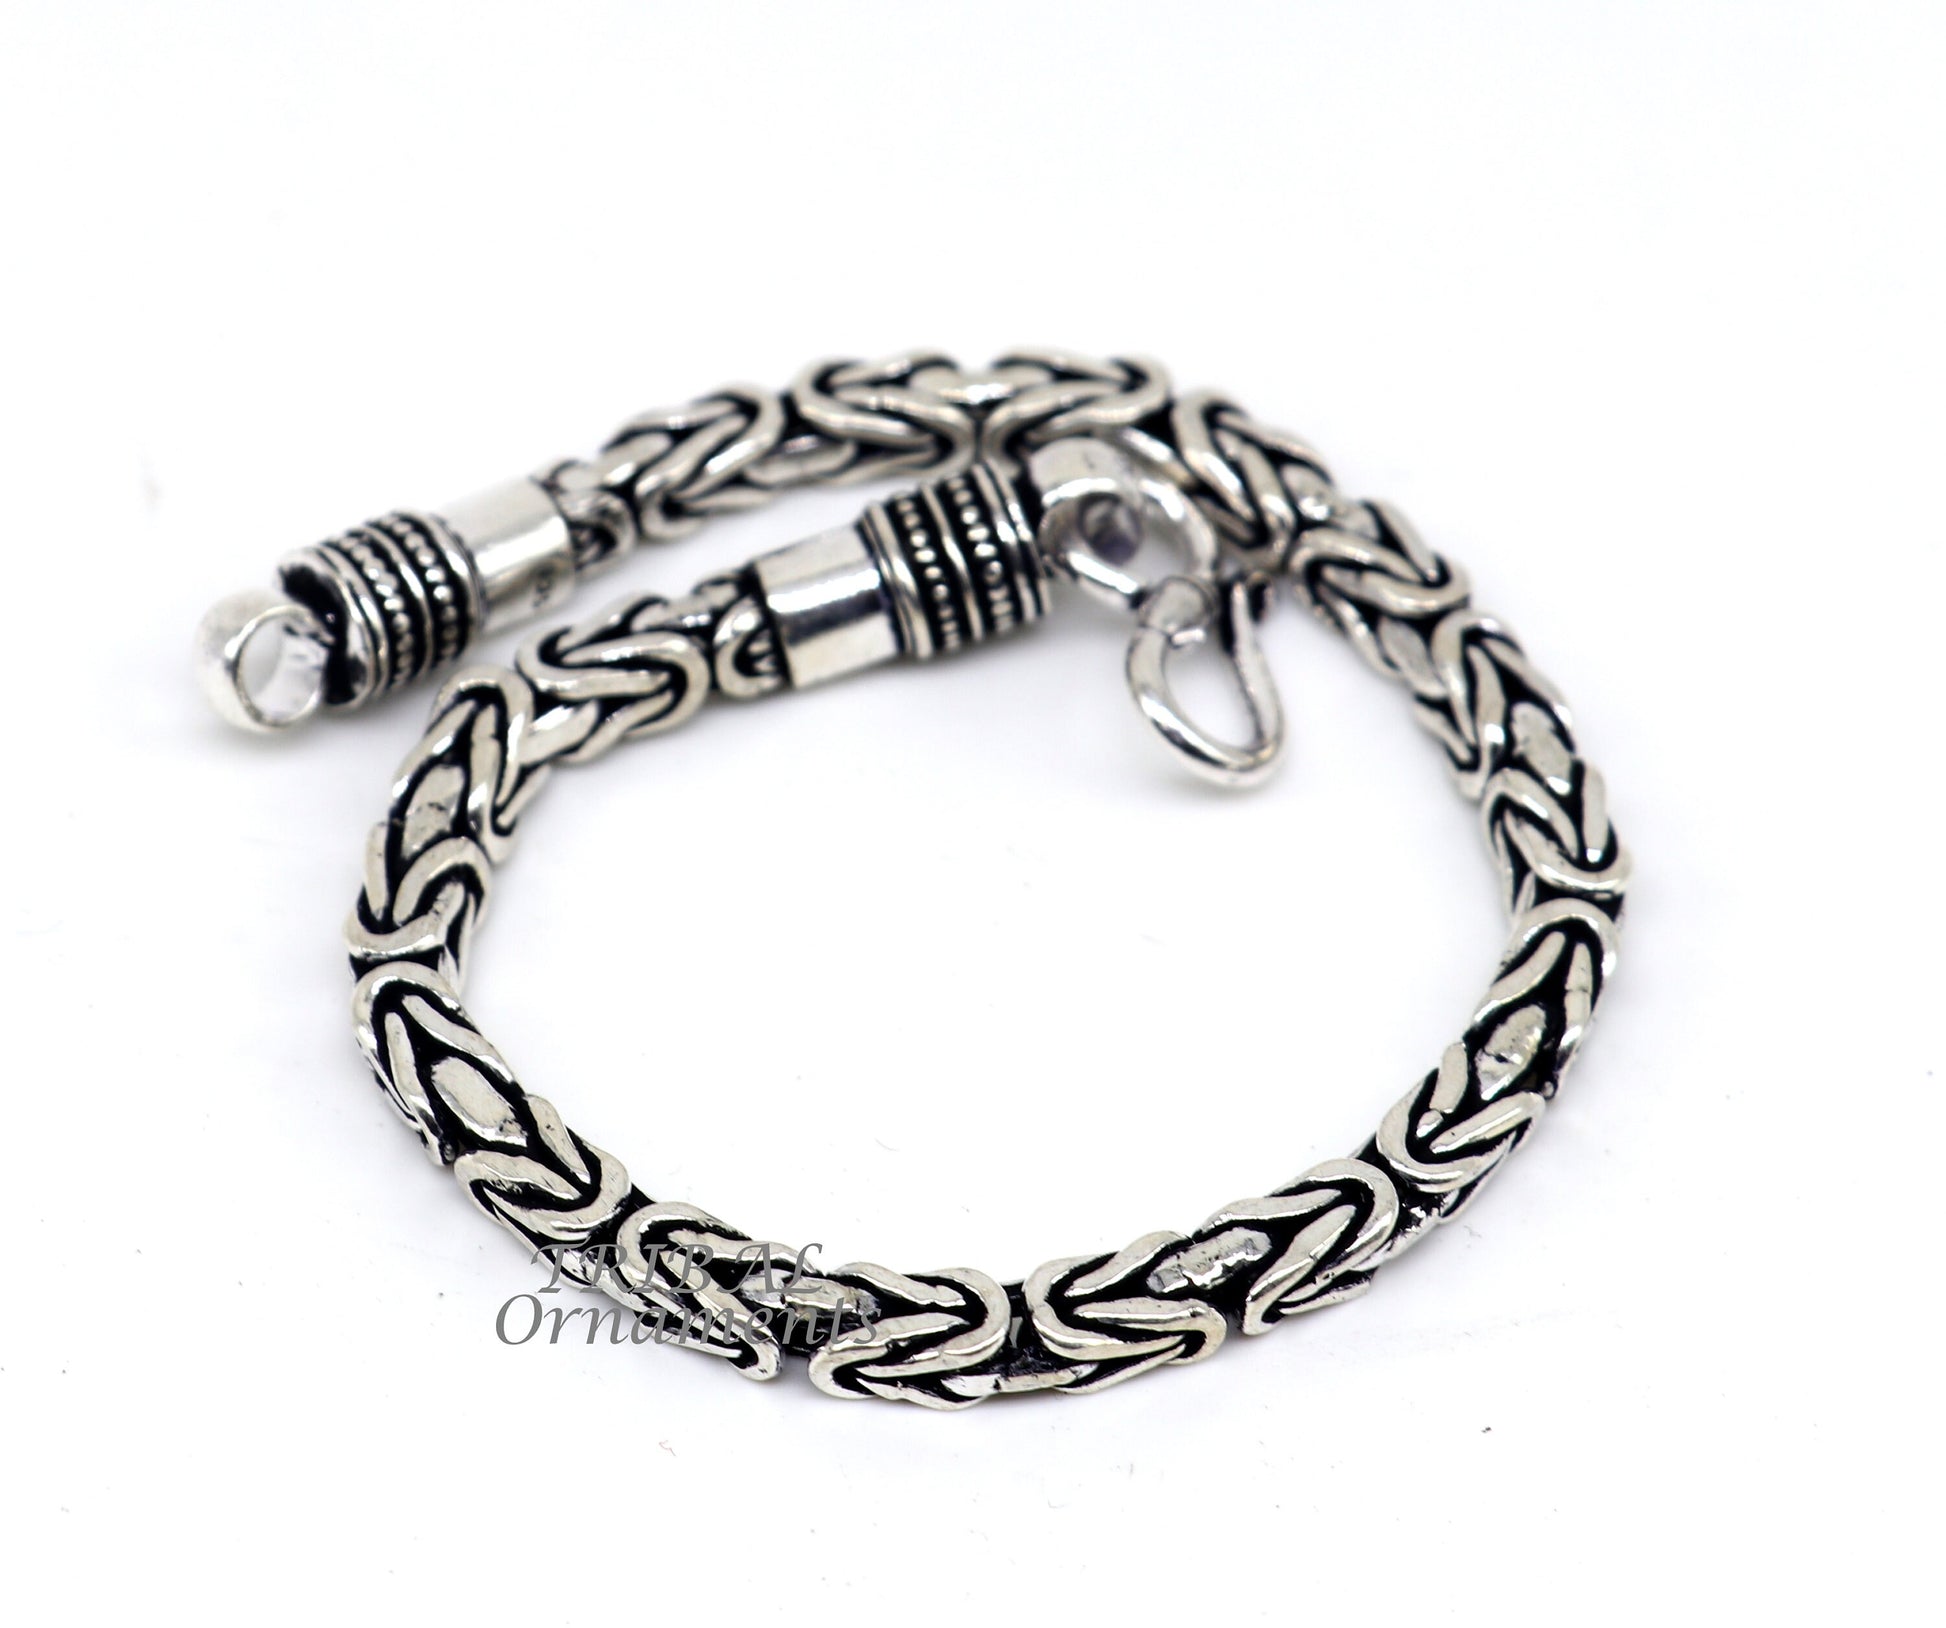 5mm 9"/9.5" Unique byzantine vintage design 925 Sterling silver handmade chain bracelet flexible bracelet unisex jewelry from india  sbr430 - TRIBAL ORNAMENTS